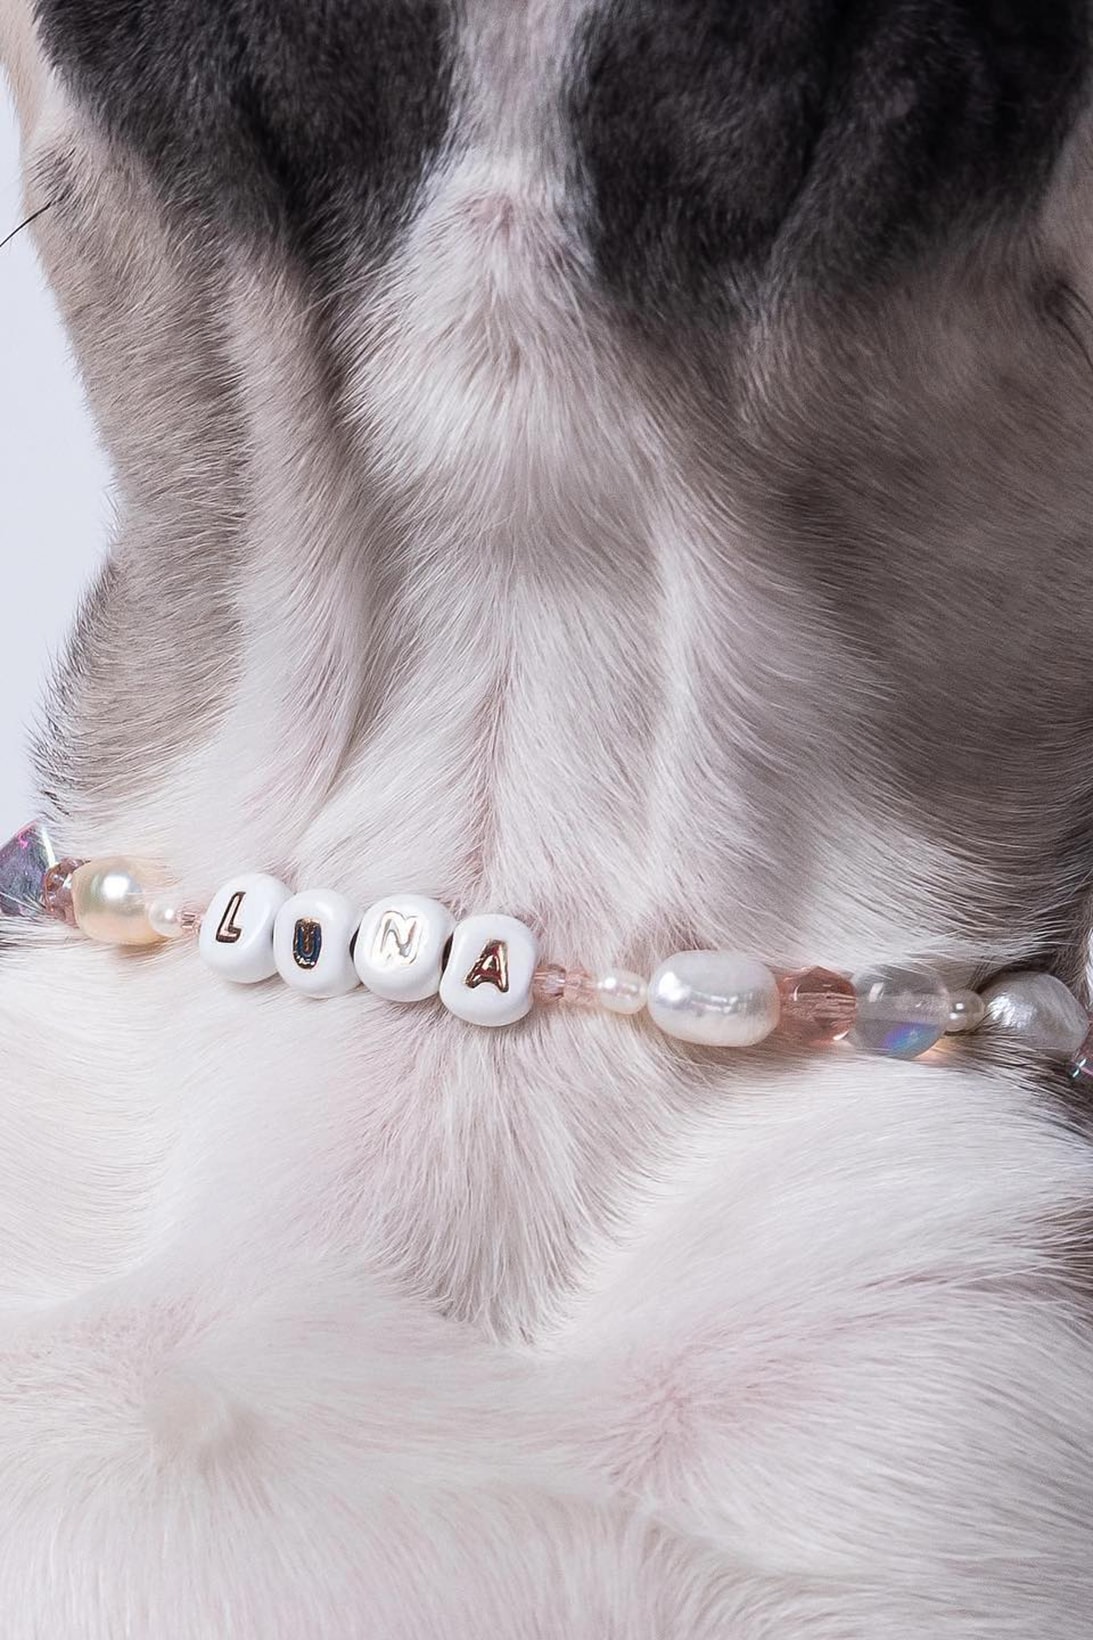 laēlap New York Dog Accessories Brand Pets Necklace Jewelry 